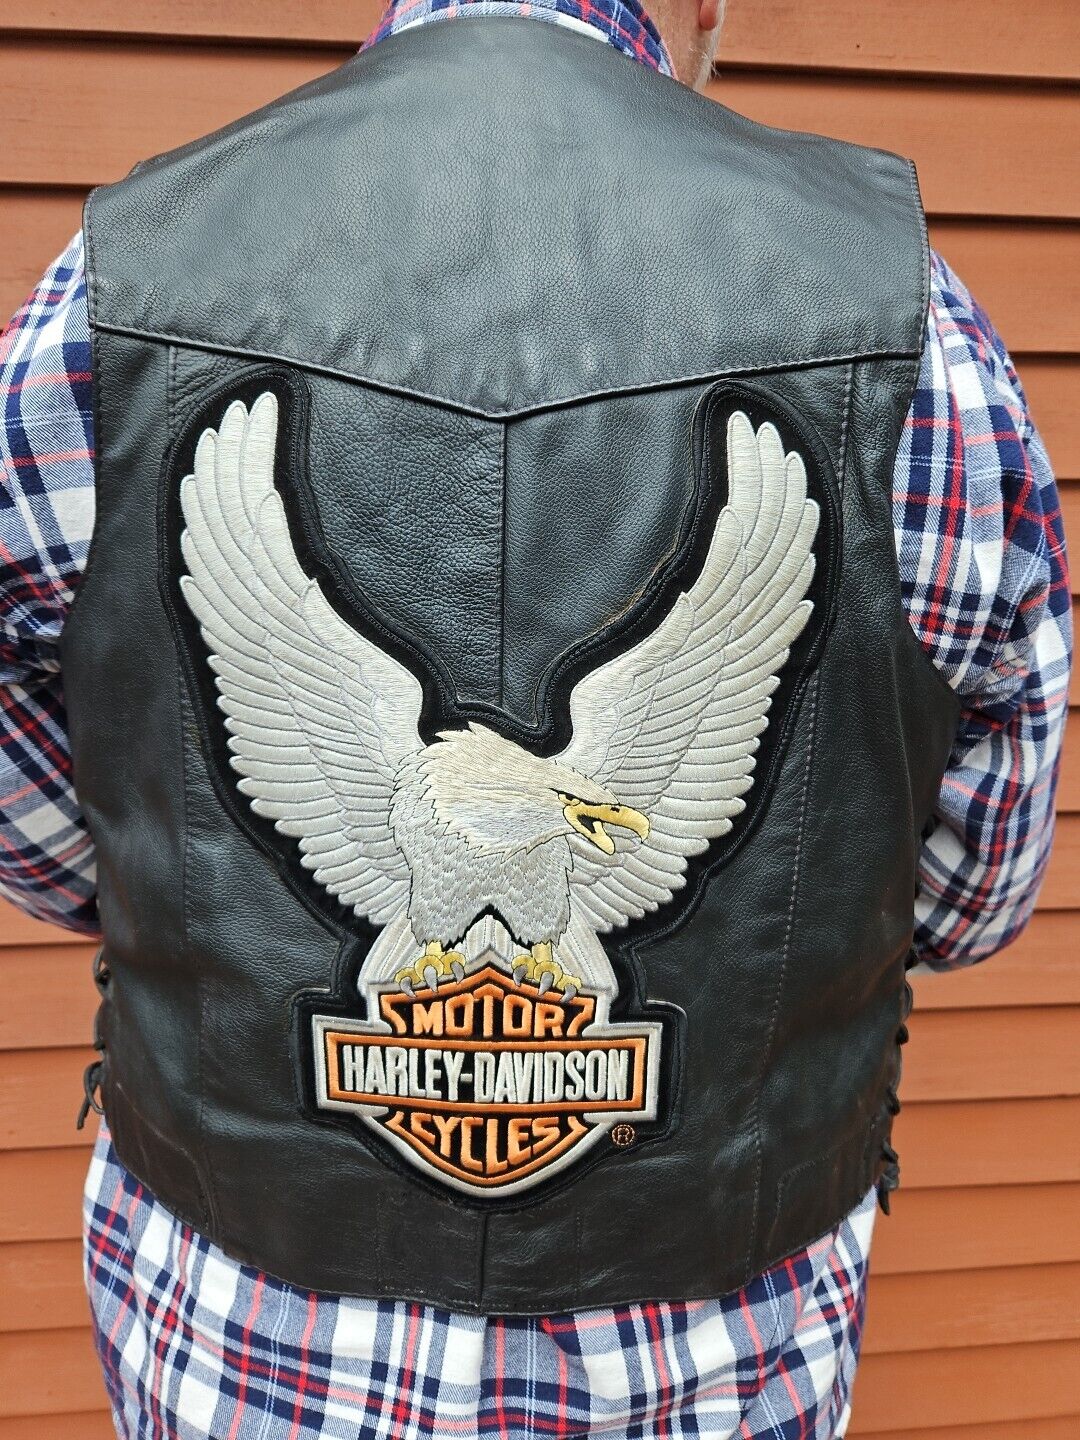  Harley Davidson Vest Hillside USA, Lace Up Black Leather Size 46 